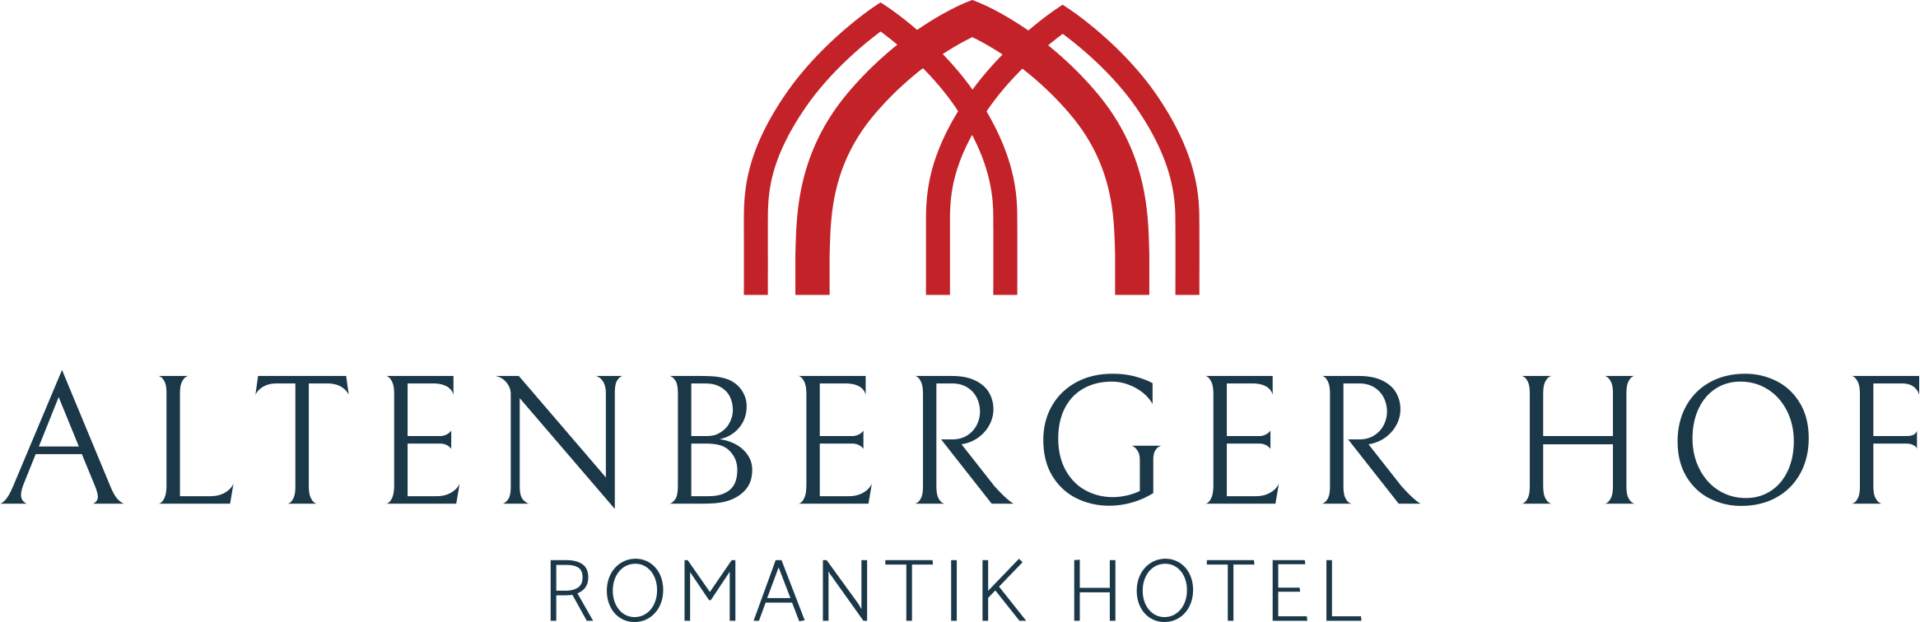 Altenberger Hof Romantik Hotel